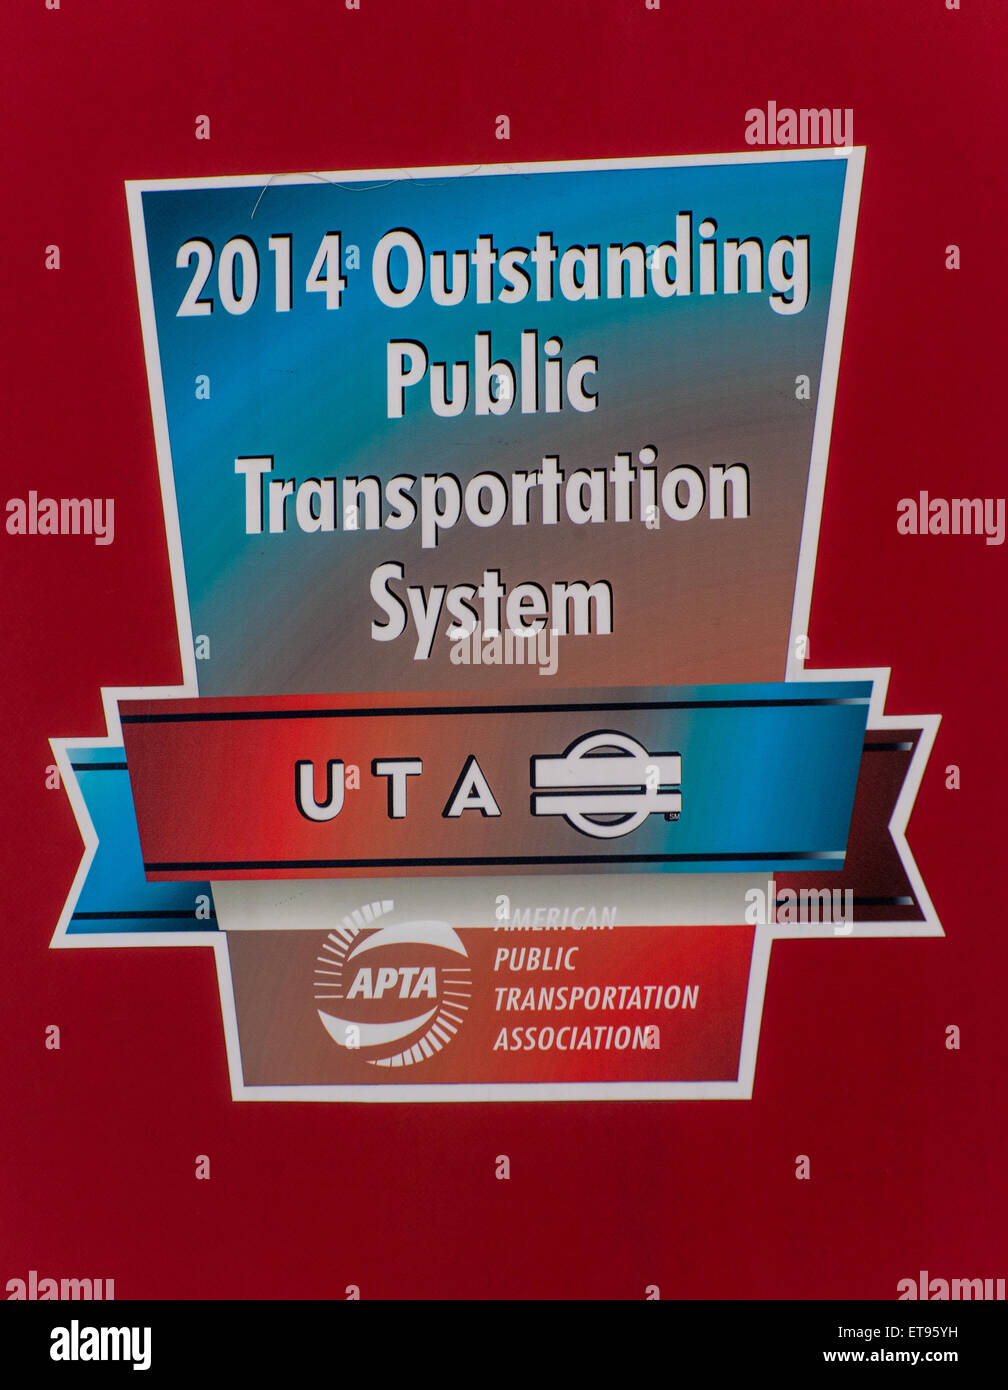 Herausragende öffentliche Transportsystem 2014 - Utah Transit Authority (UTA) Erkennungsmarke Stockfoto